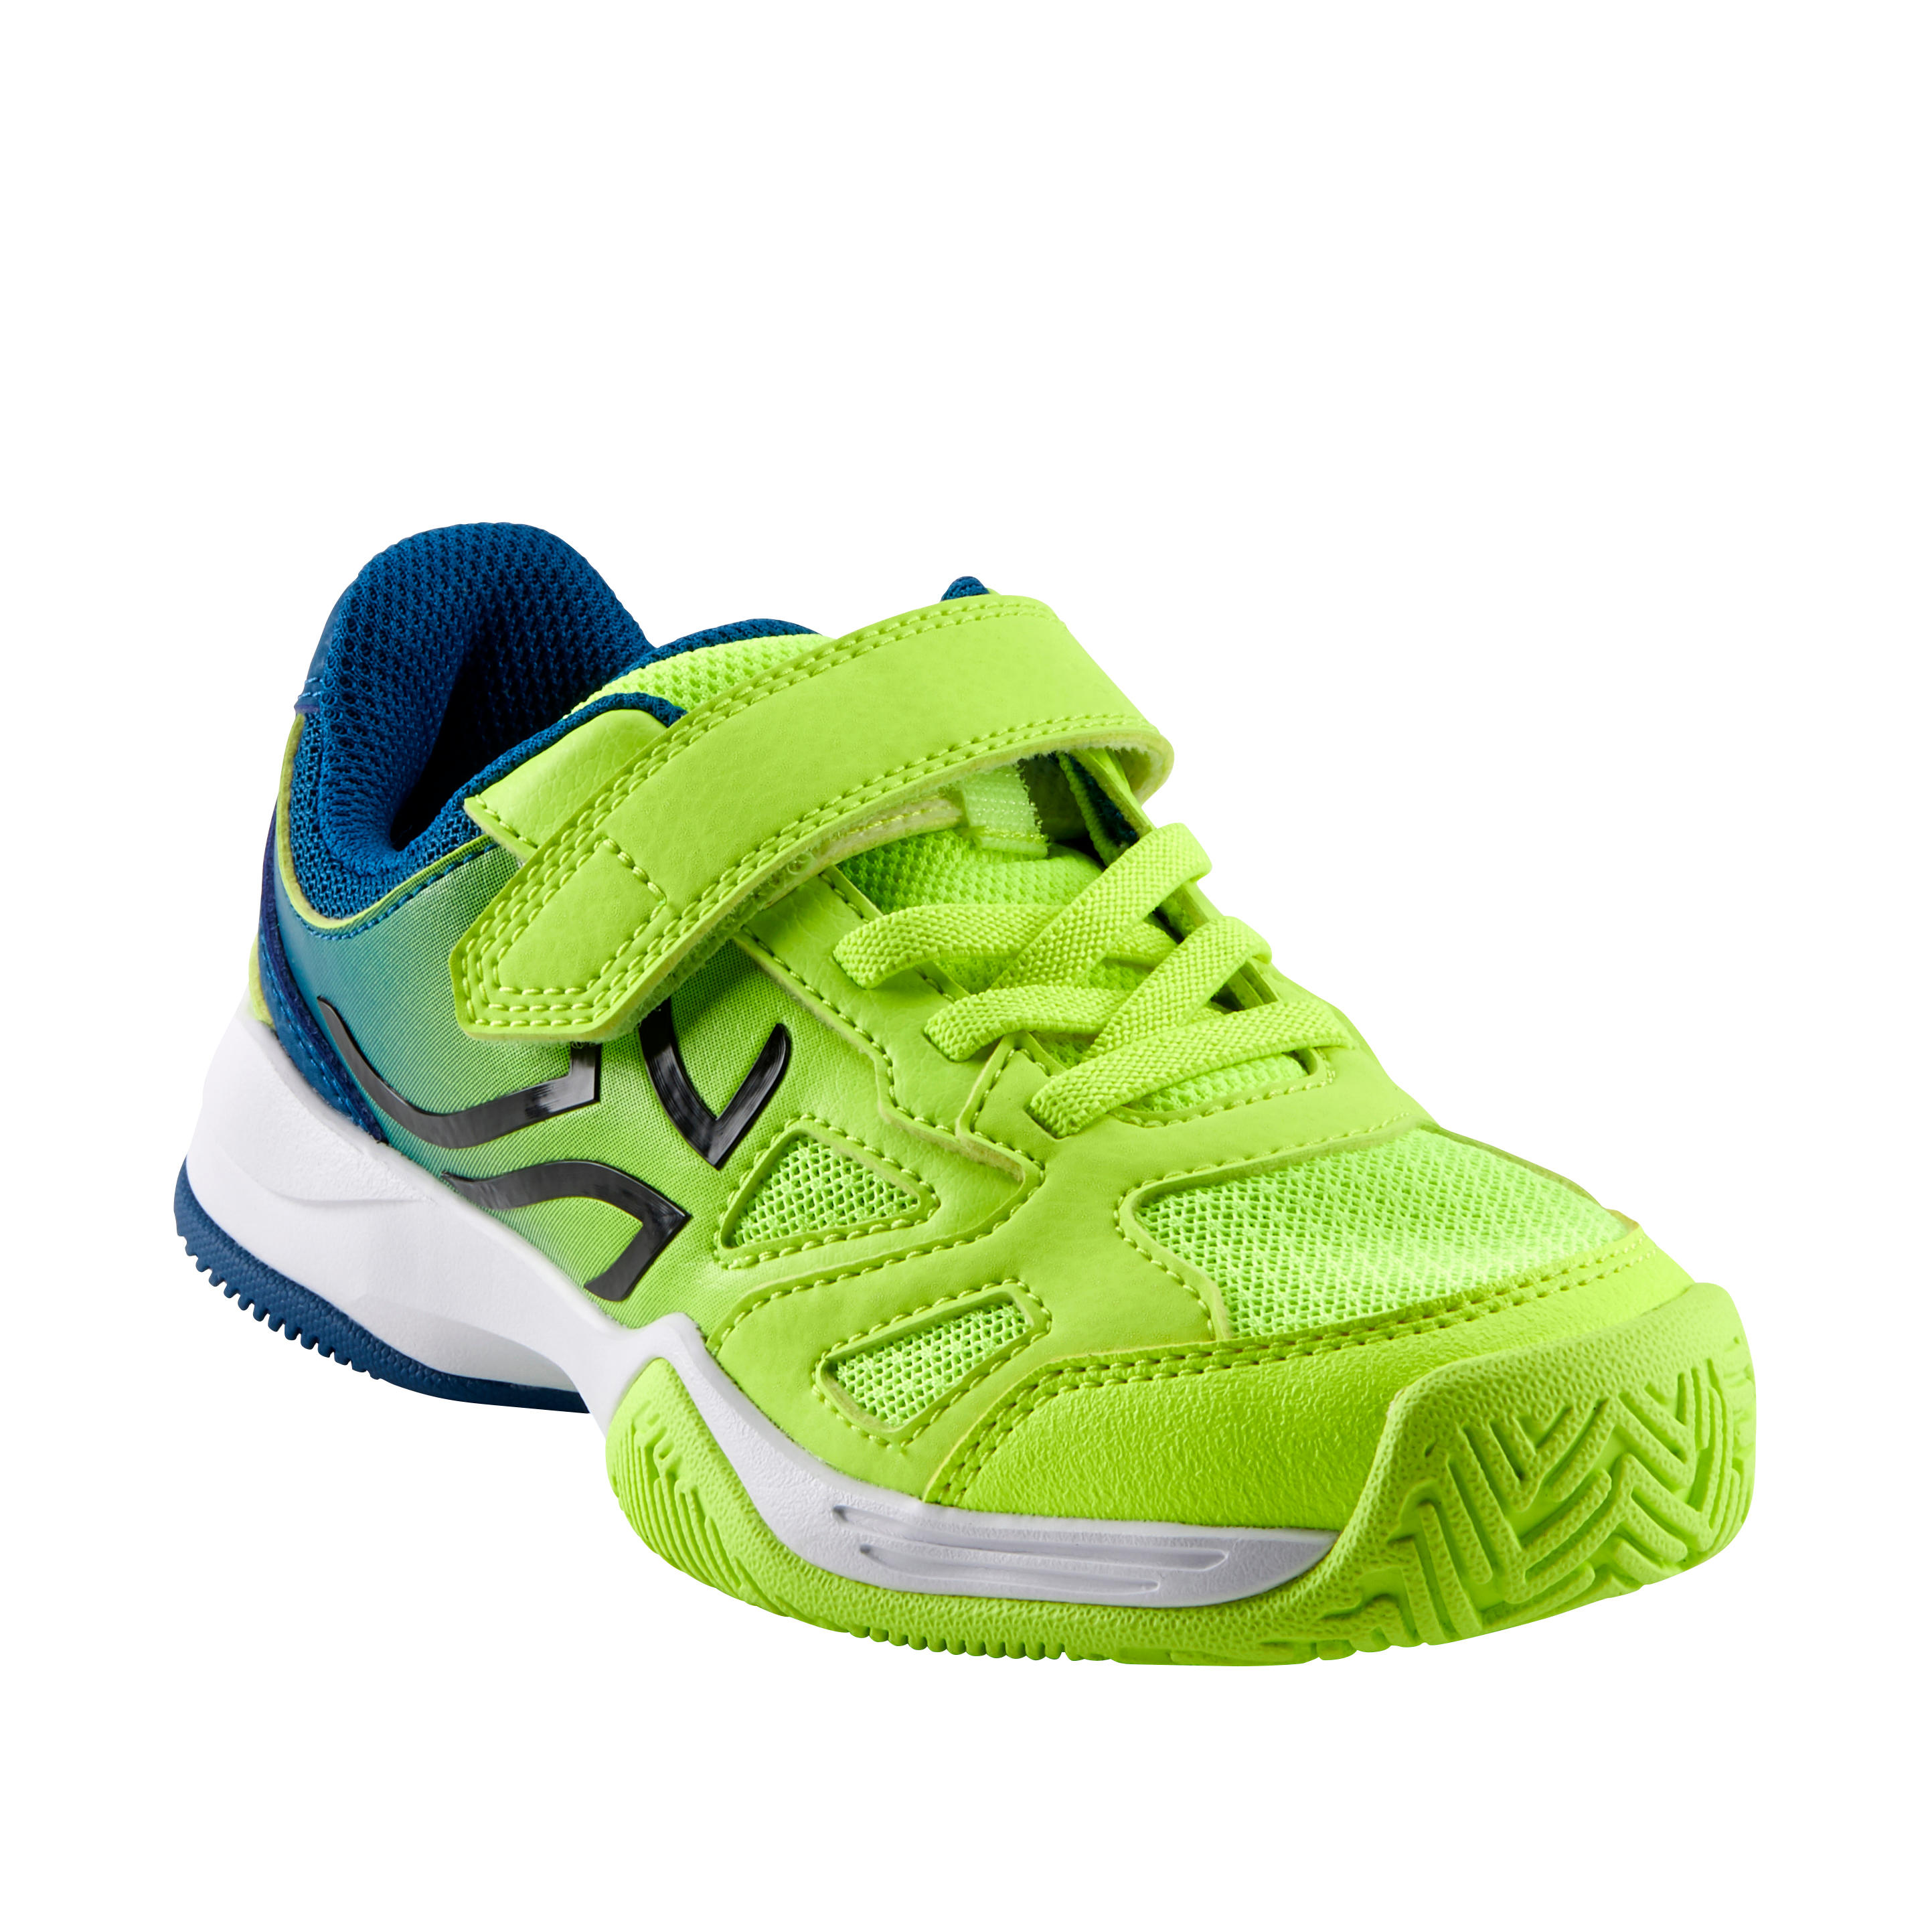 decathlon tennis shoes review